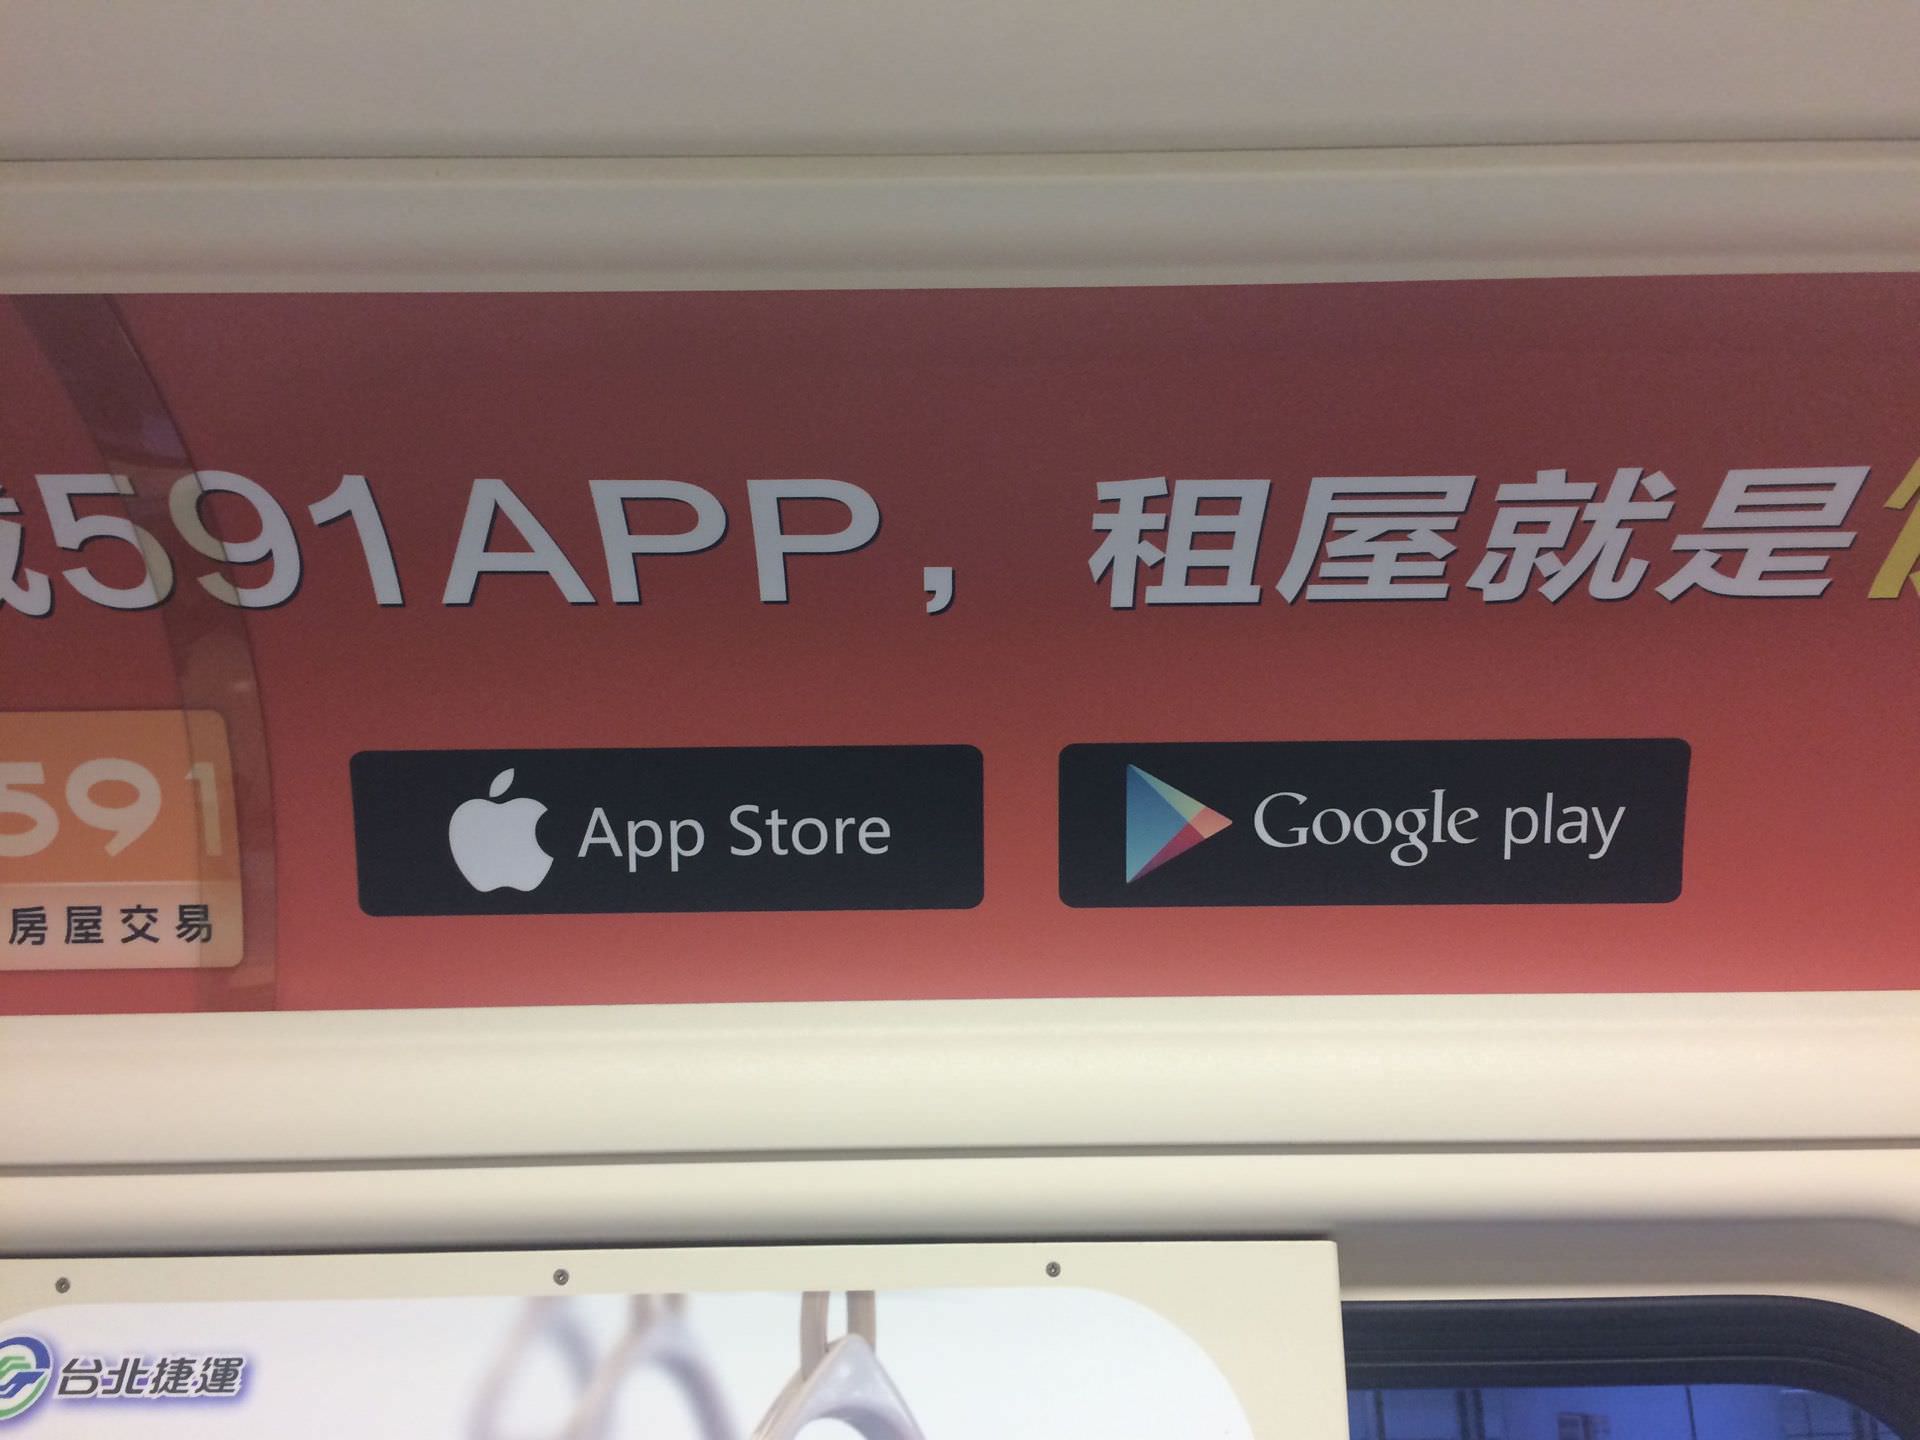 591-app-1-taipei-mrt-ad